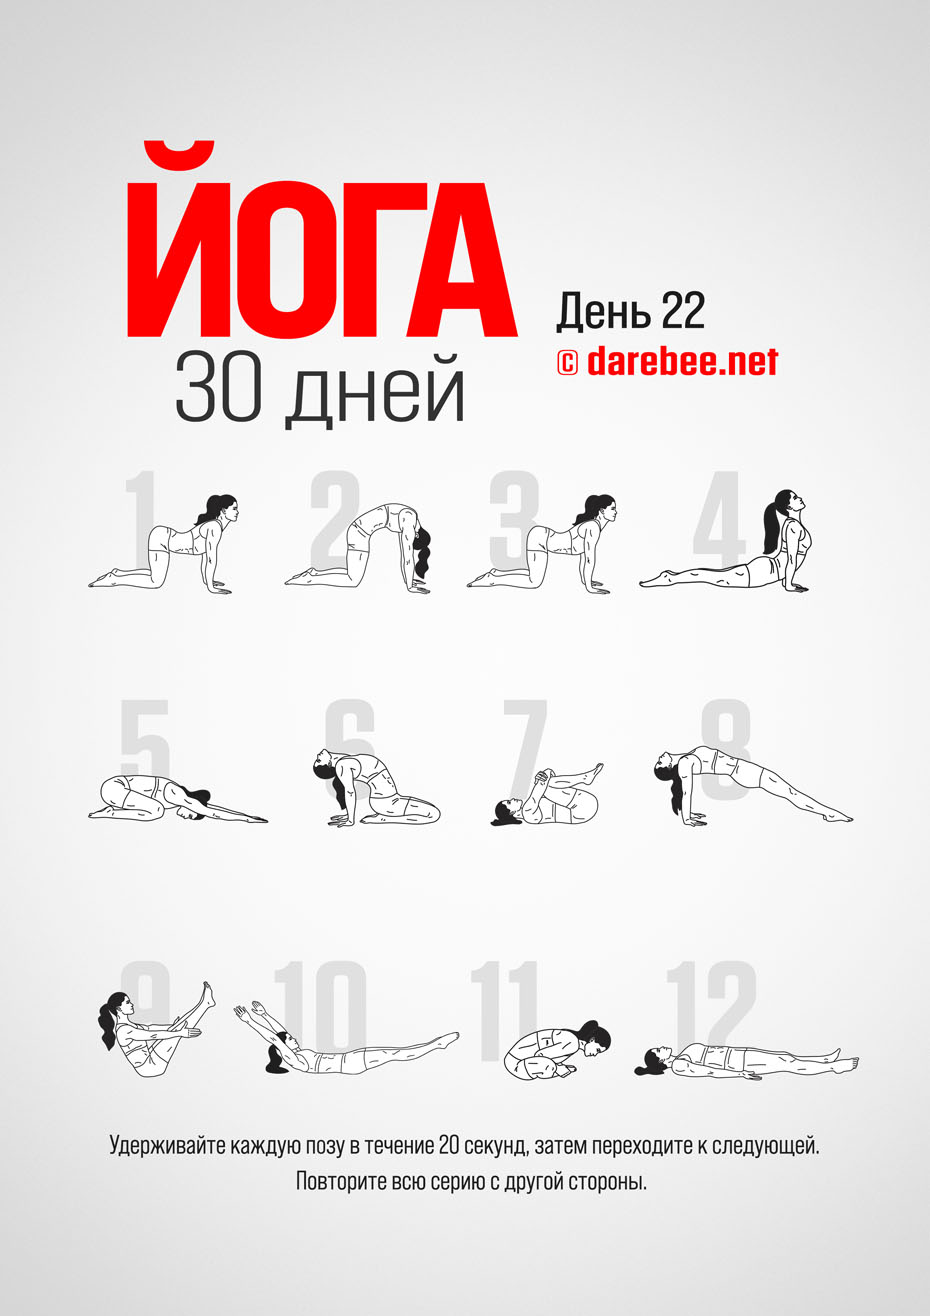 30 Days of Yoga - Program by DAREBEE